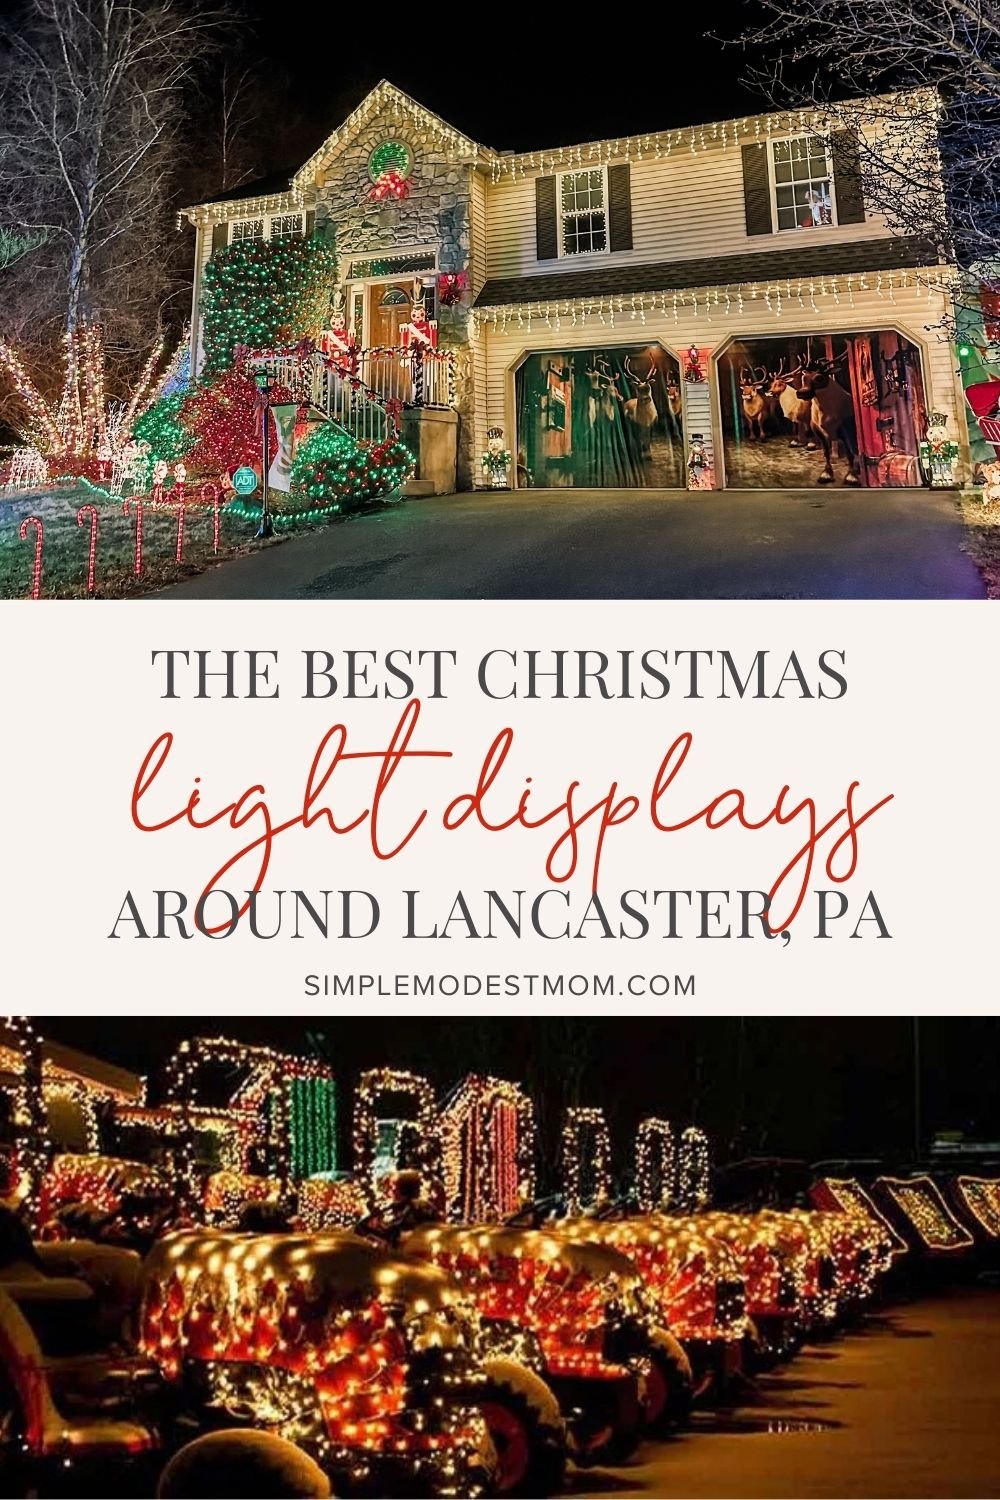 The Best Neighborhood Christmas Light Displays Around Lancaster PA - Simple Modest Mom.jpg